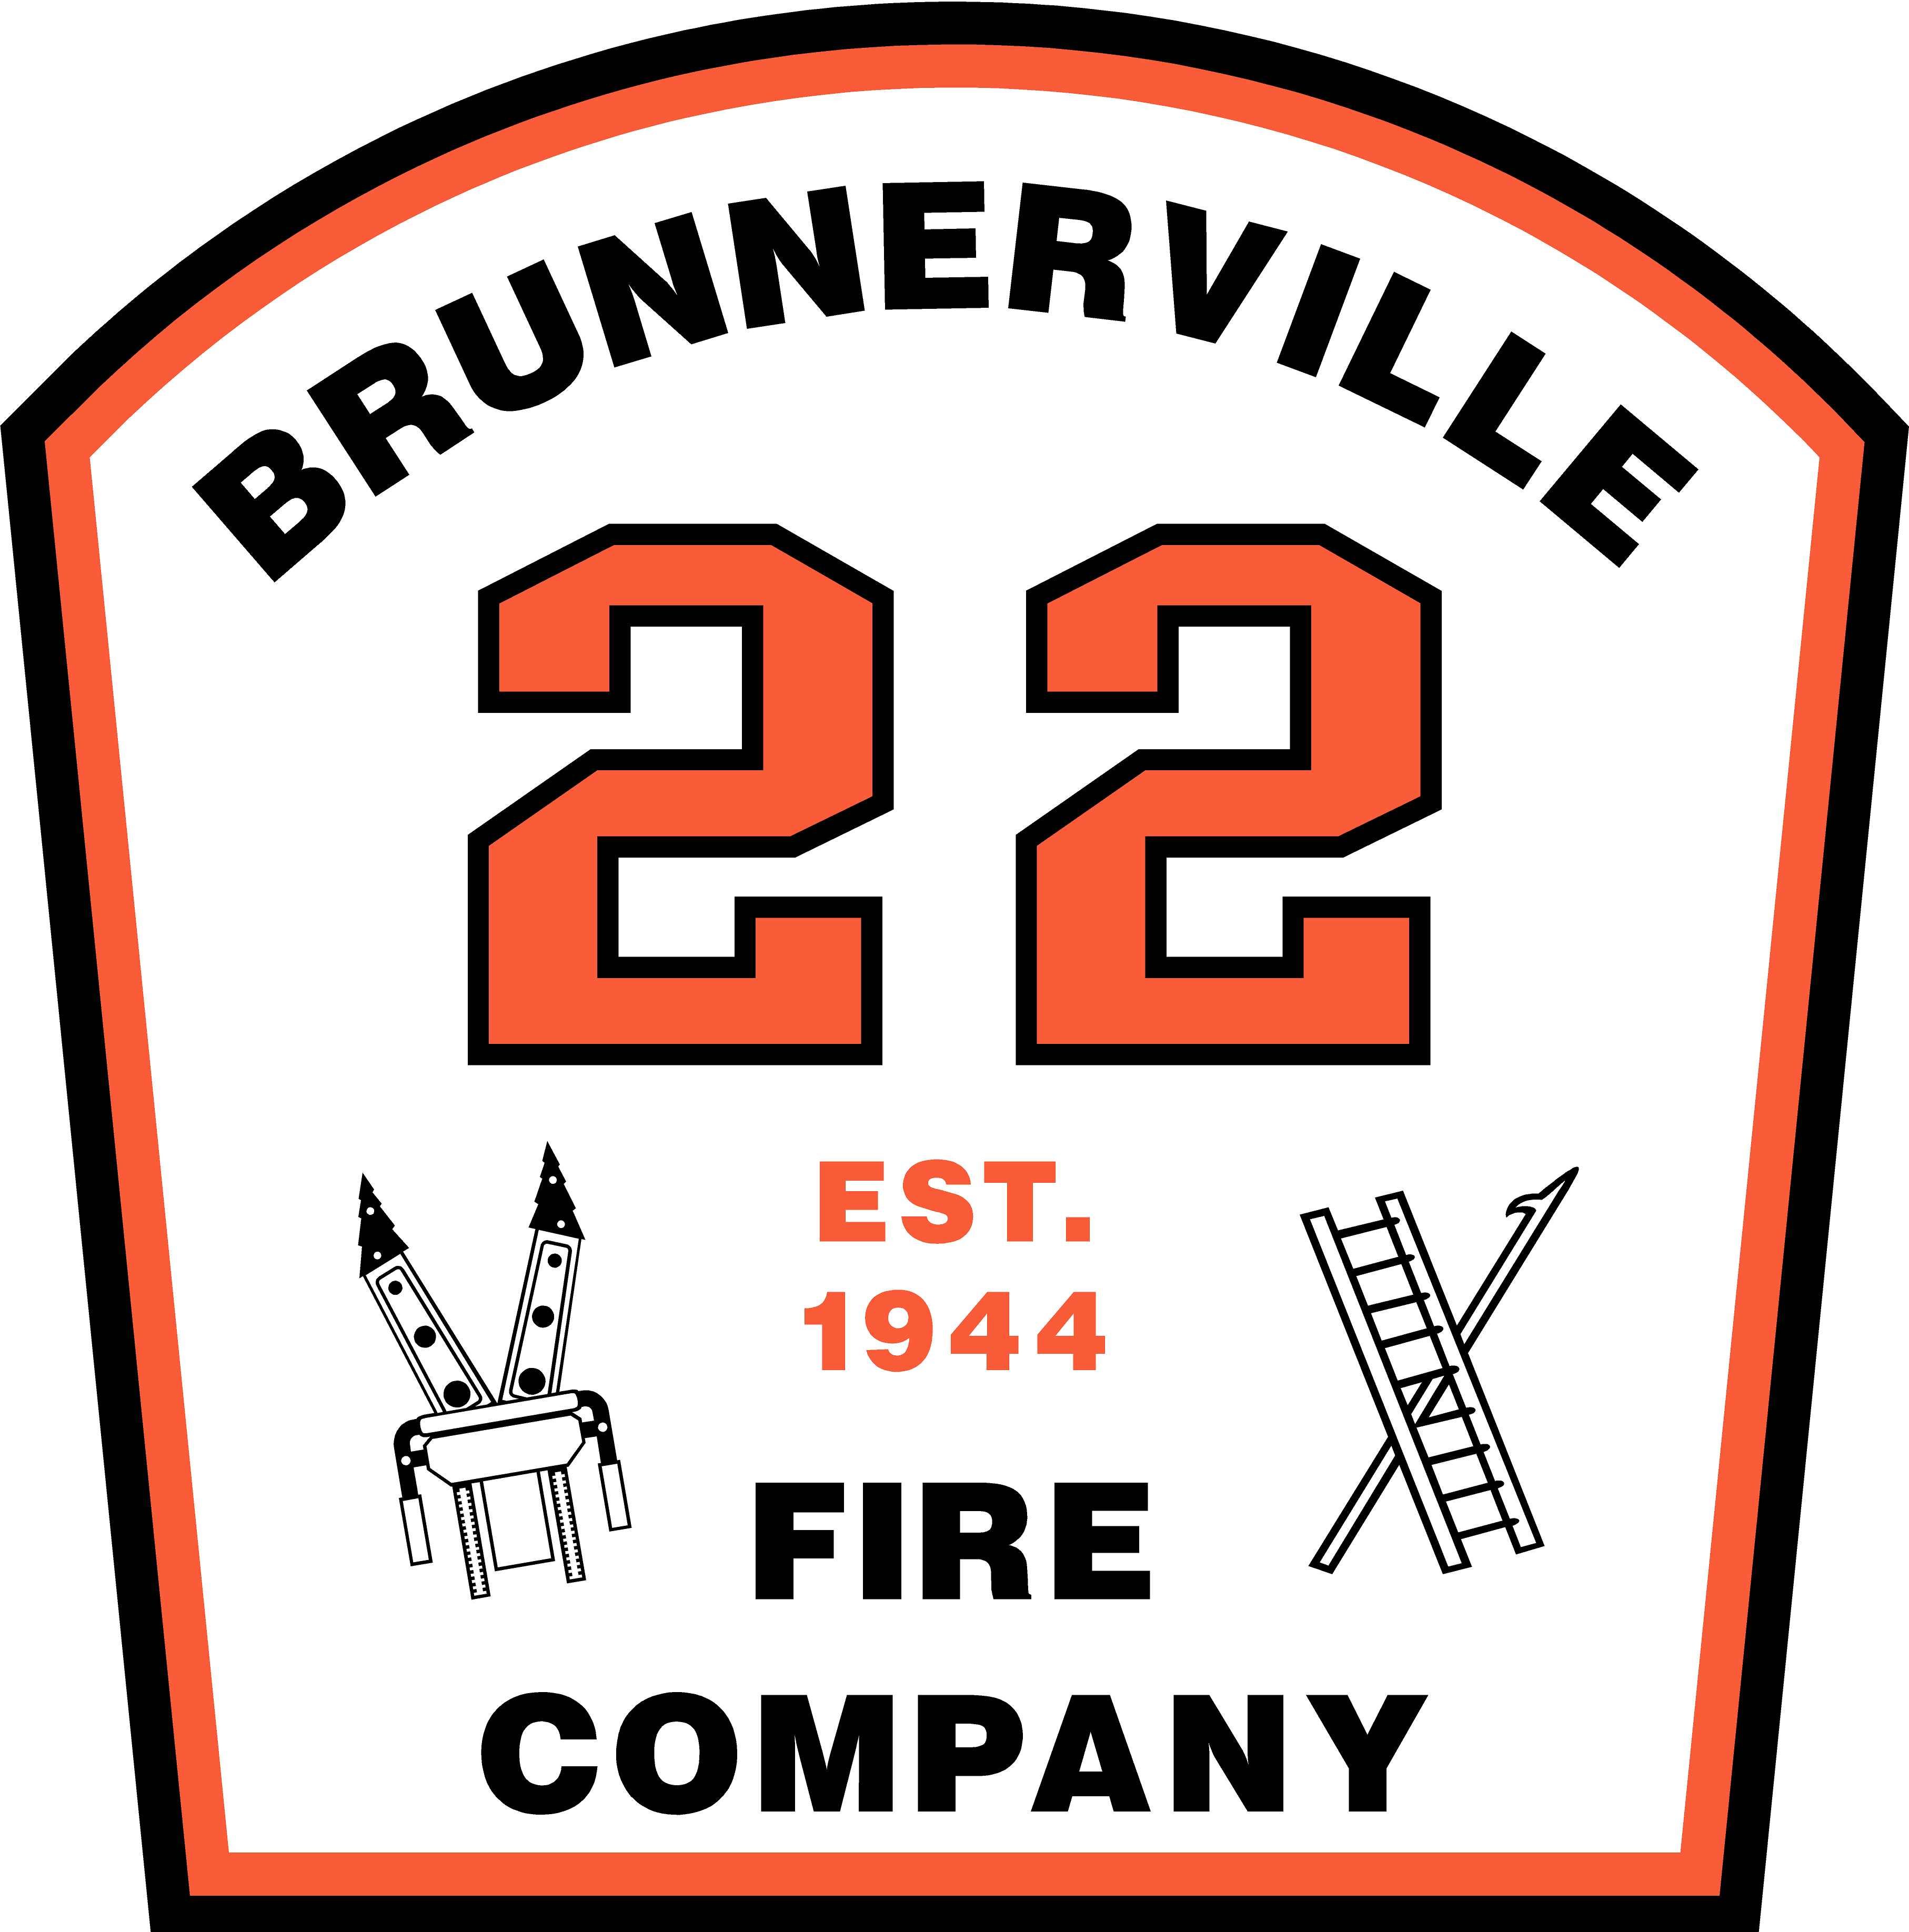 Brunnerville Fire Company